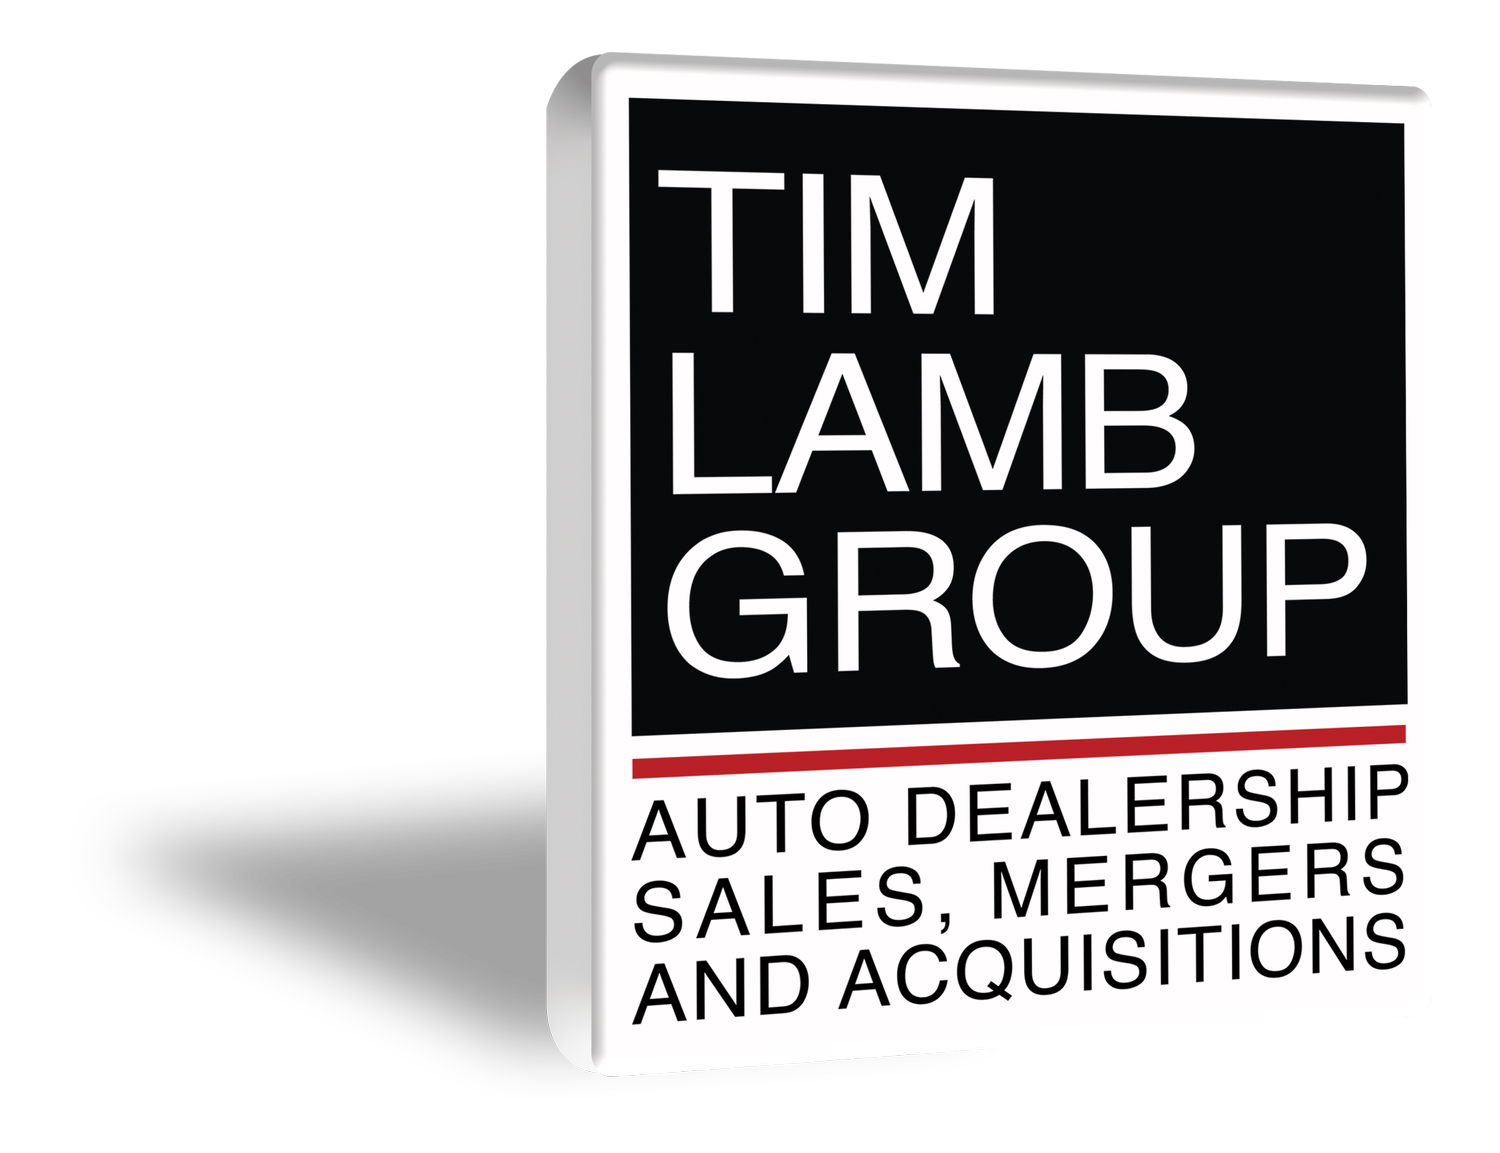 Tim Lamb Group: Auto dealership broker. Auto dealerships for sale